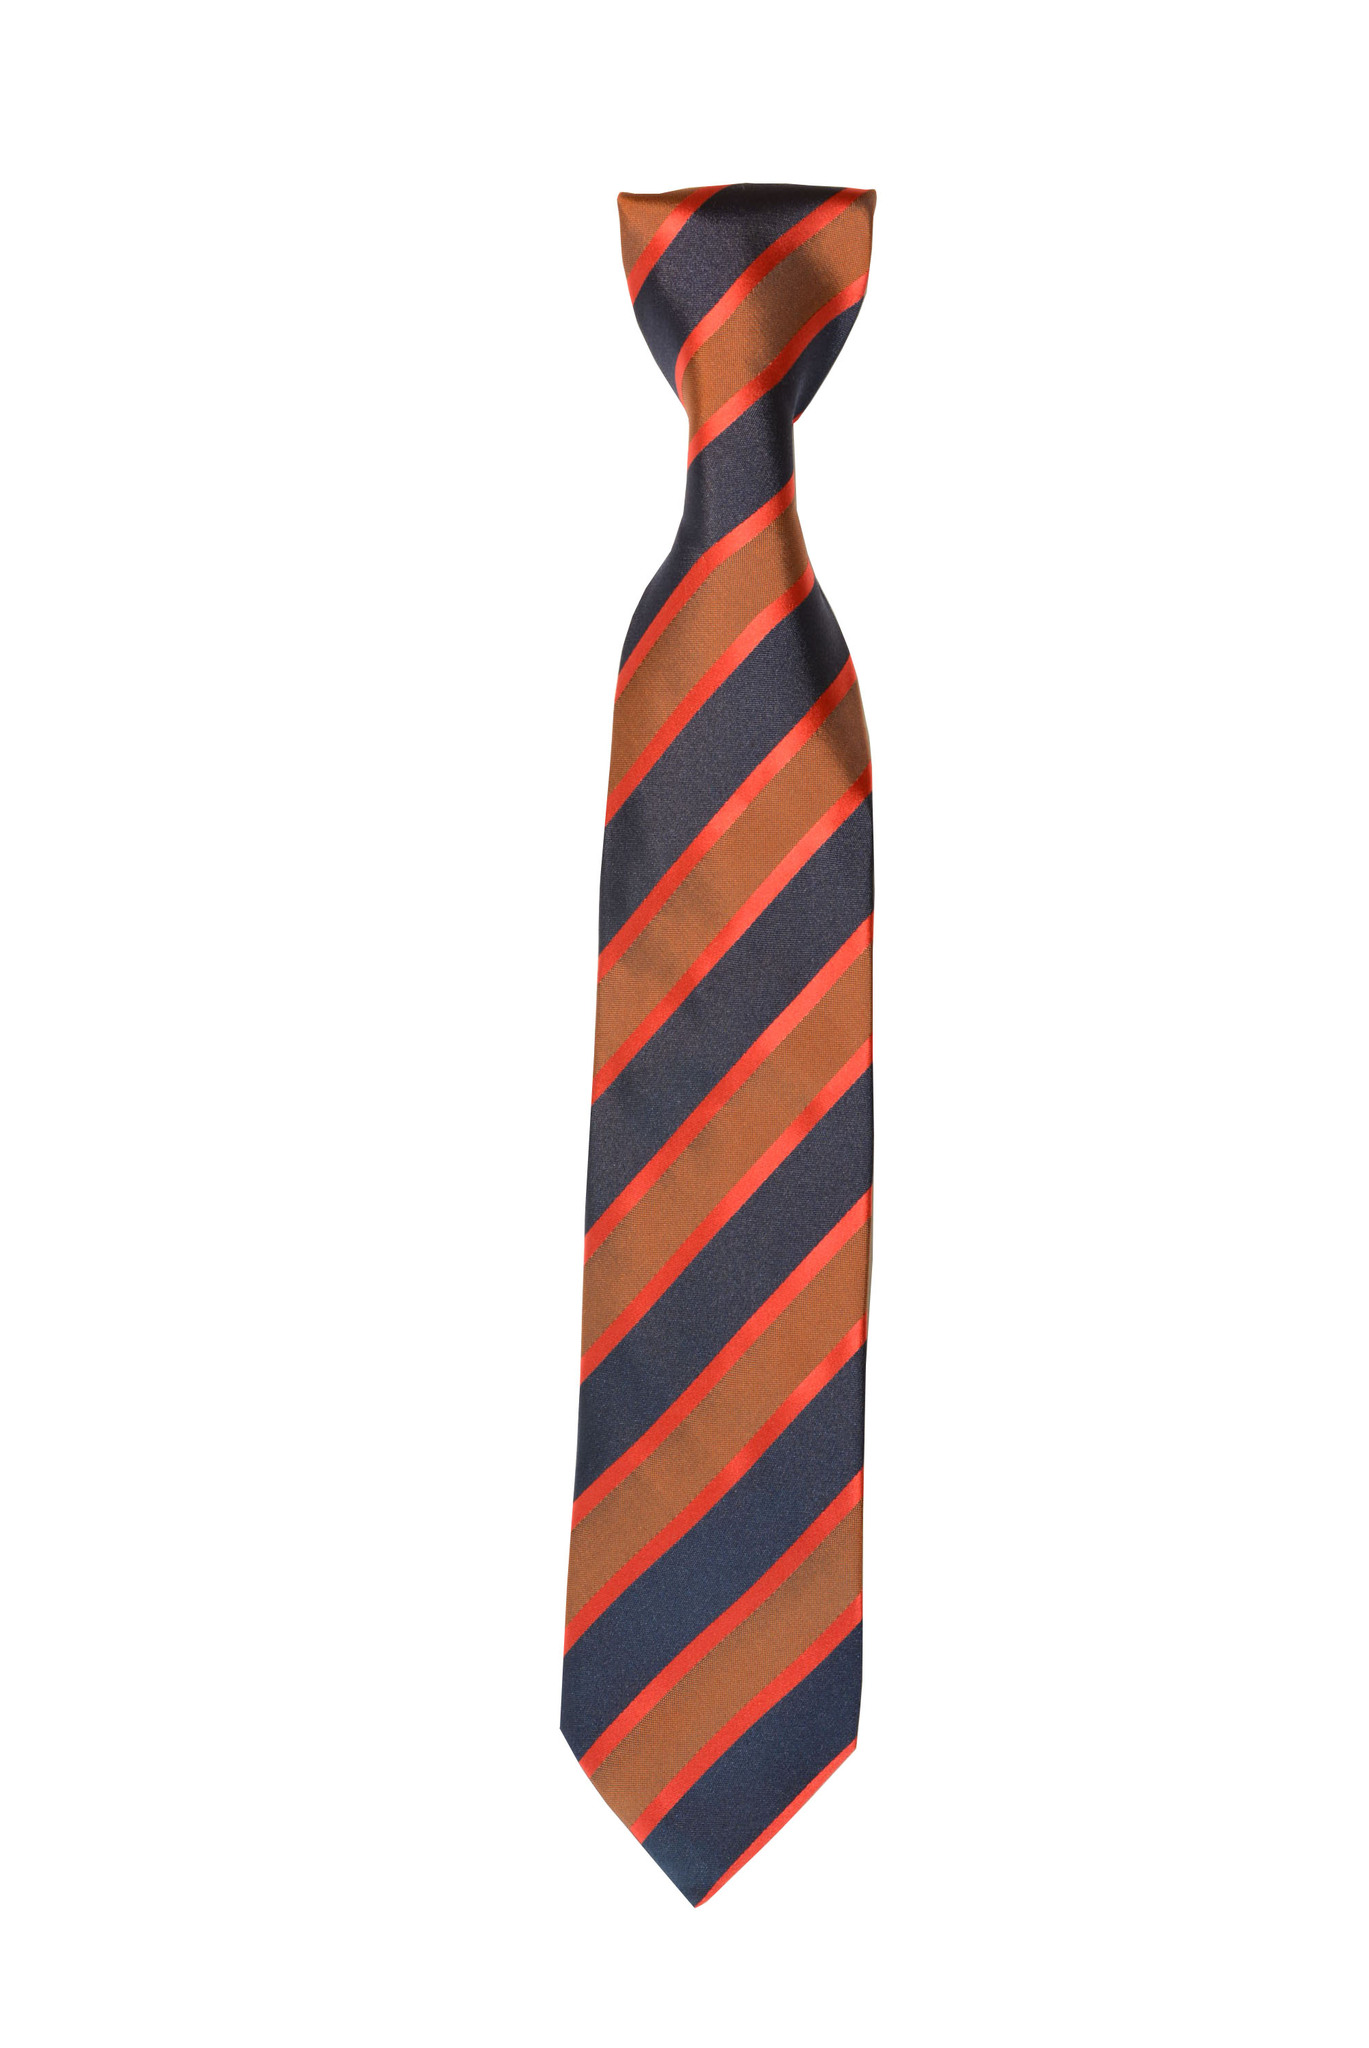 Картинка галстук мужской. Галстук. Галстук мужской. Квадратный галстук. Галстук классический.